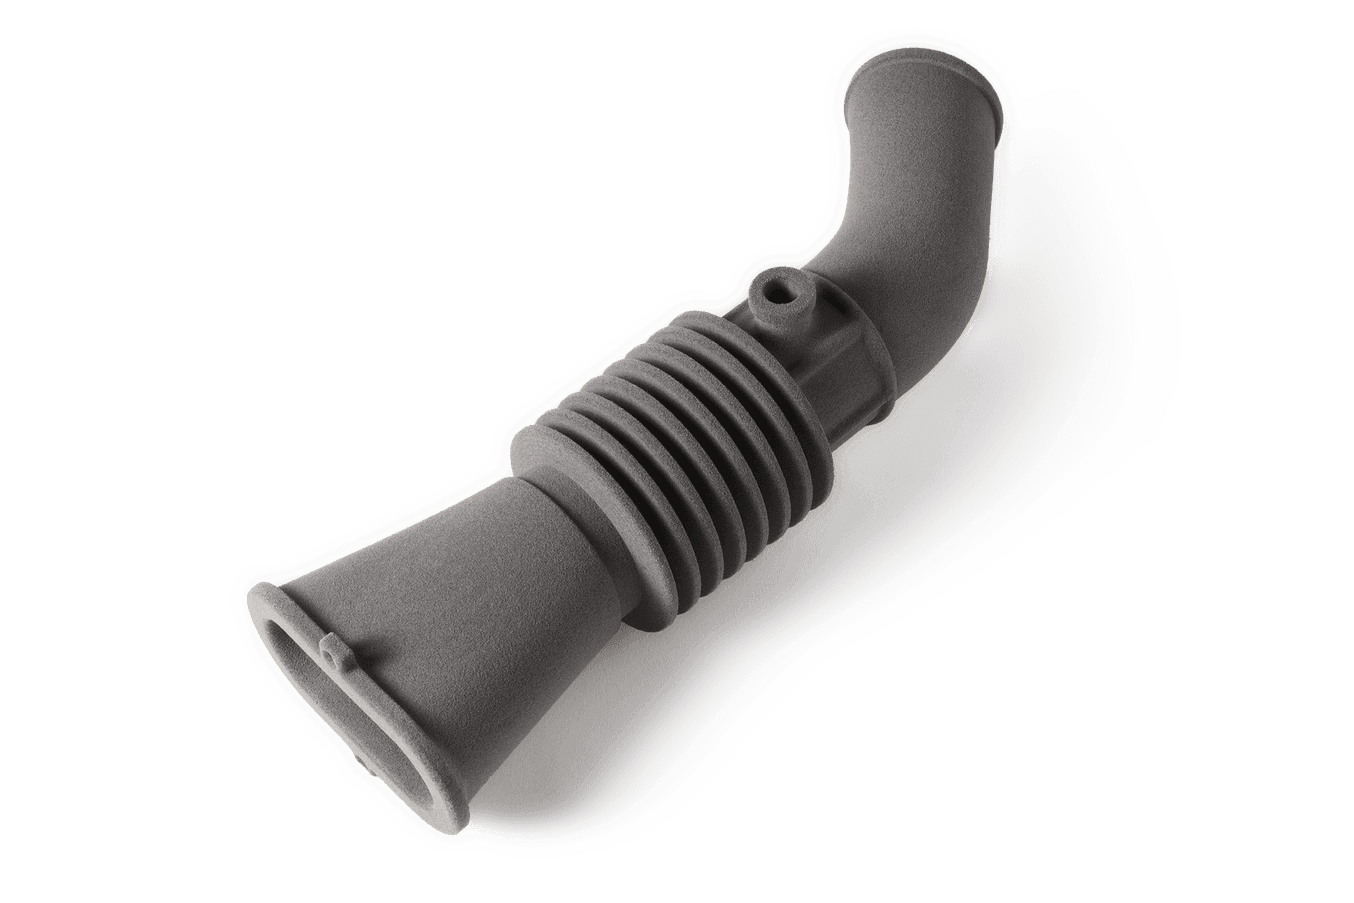 Flexible tubing 3D printed on the Fuse Series SLS 3D printers.